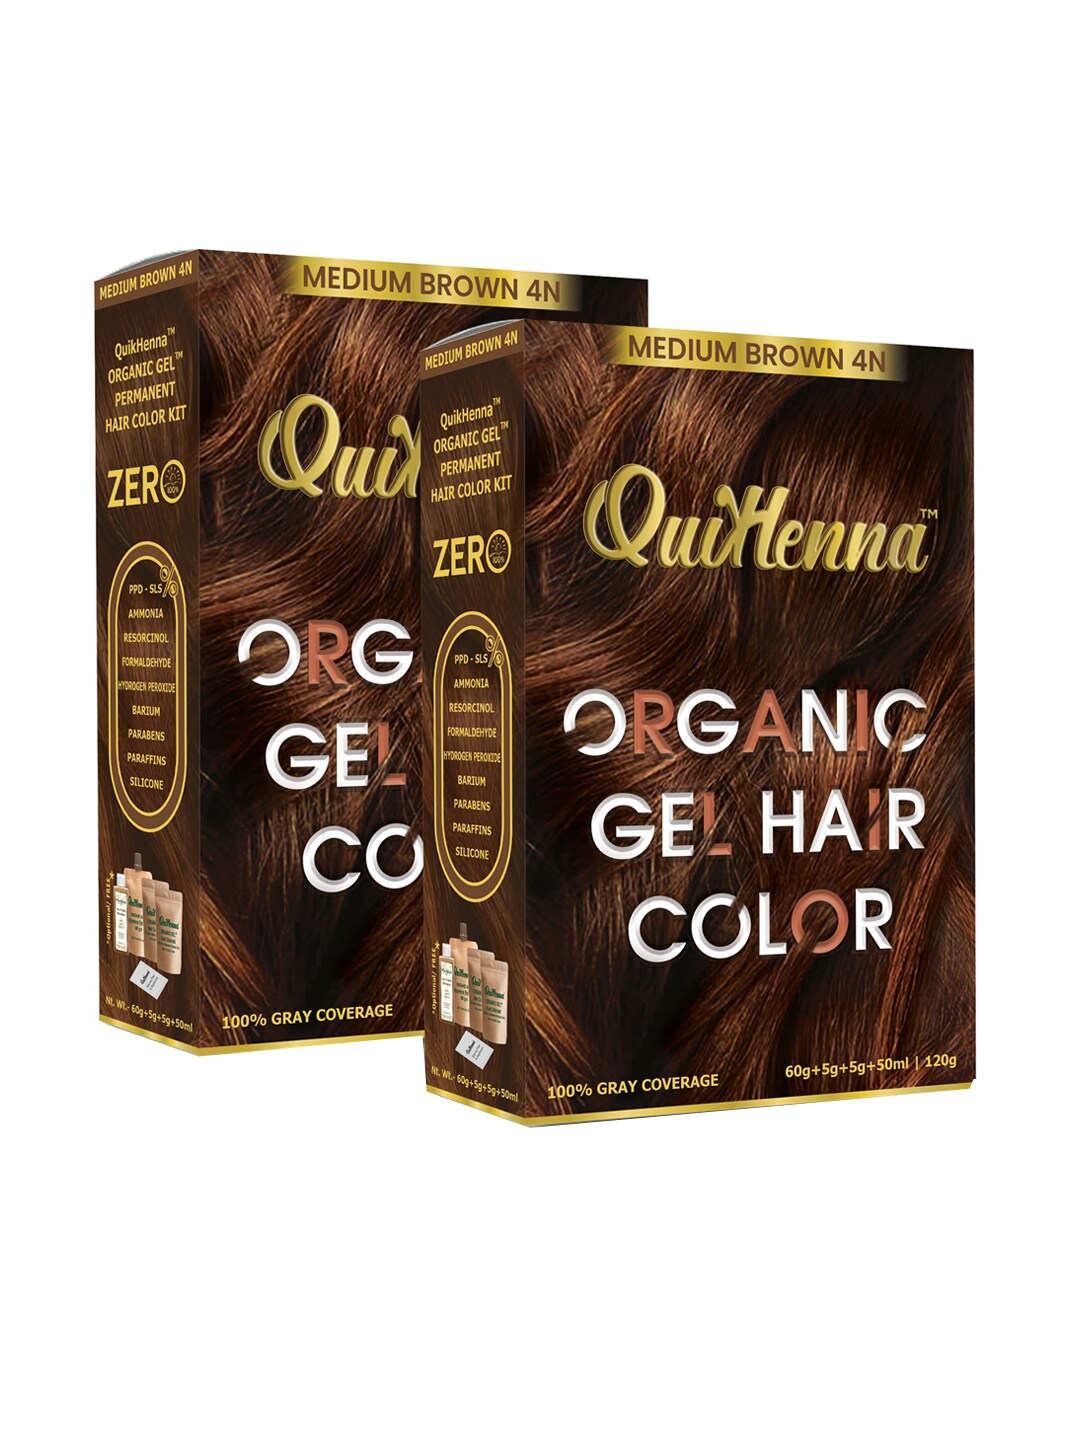 QUIKHENNA Unisex Medium Brown Damage Free Set Of 2 Organic Gel Hair Color 4N - 120 g Each Price in India